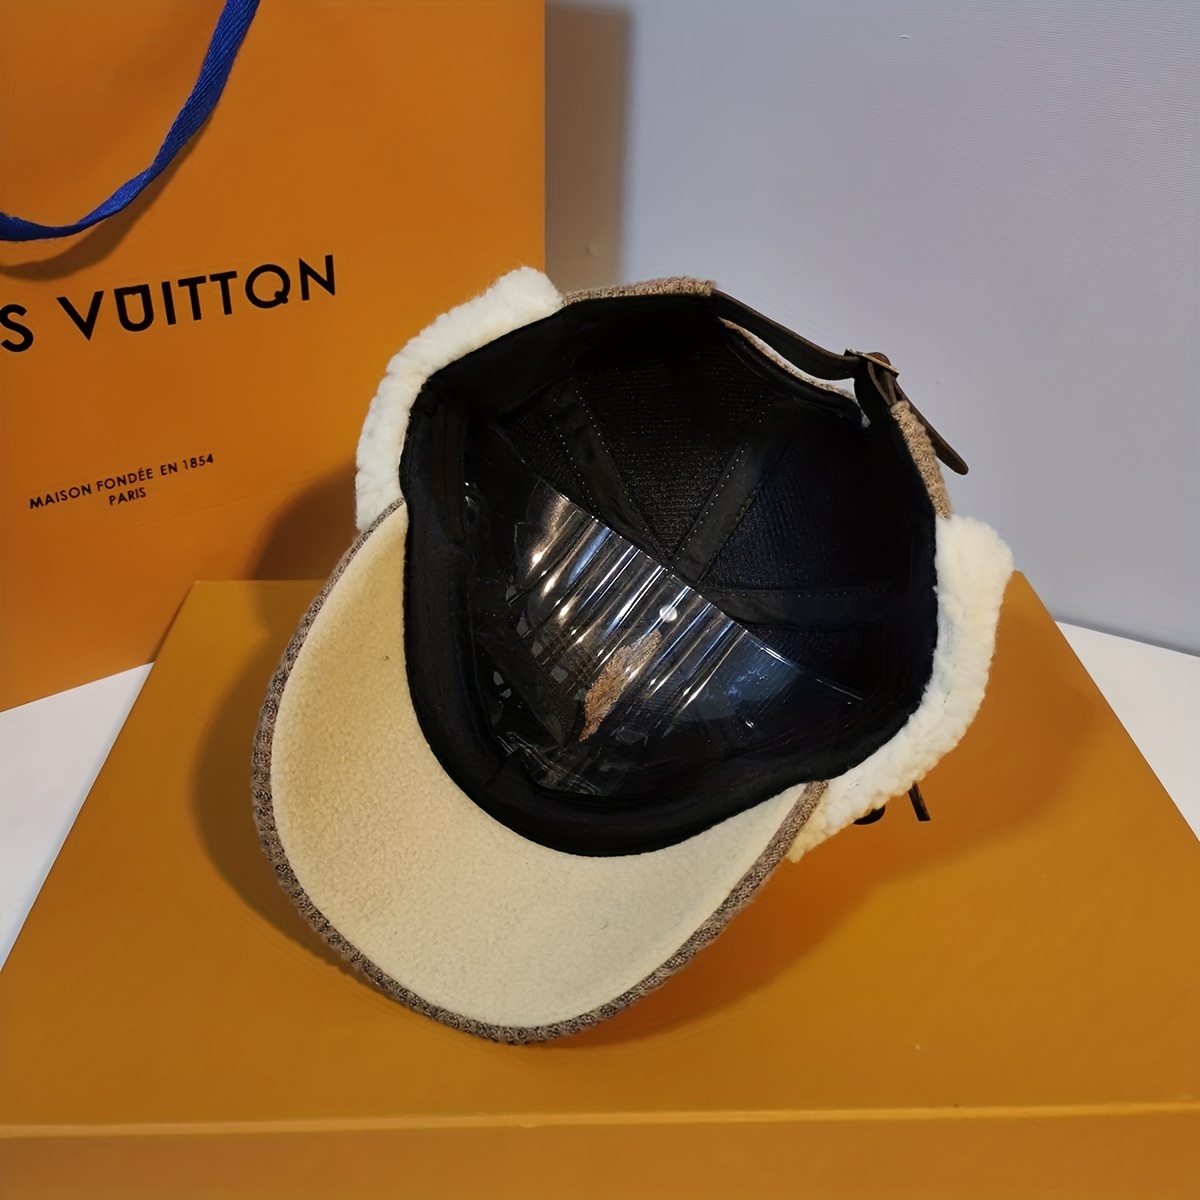 Louis Vuitton 1854 Baseball Cap